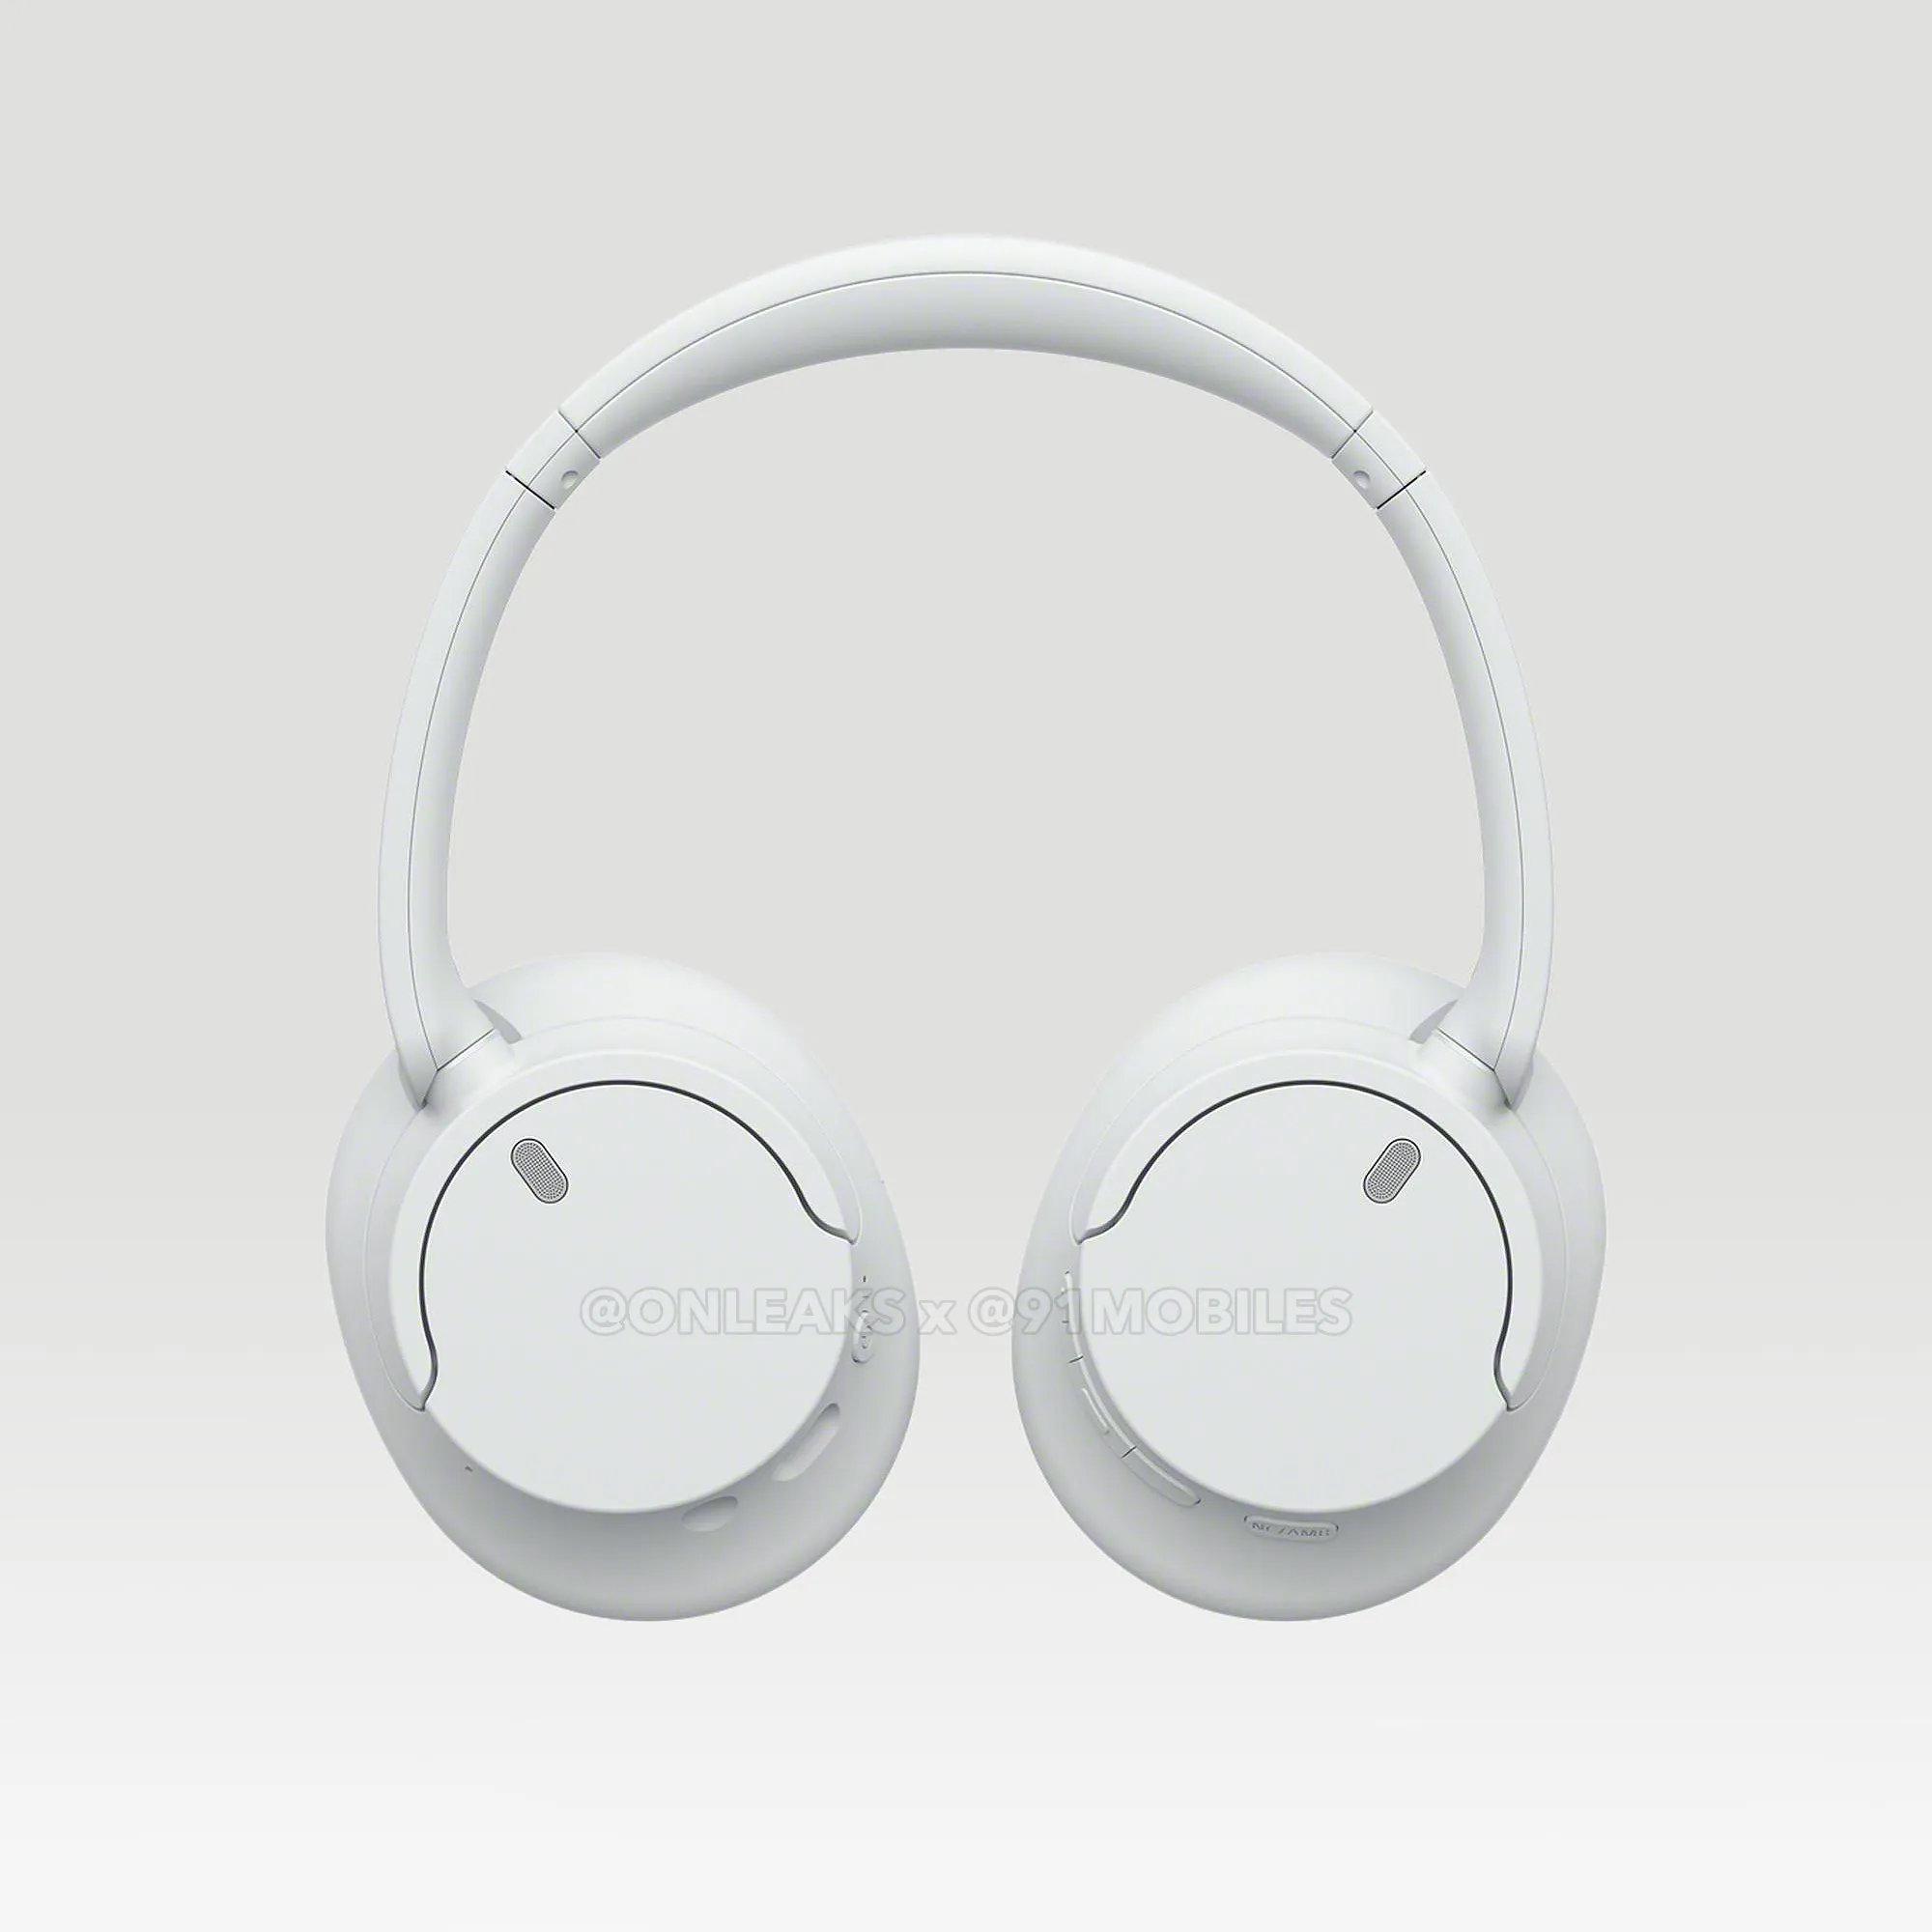 Nuevos auriculares Sony WH-CH720N y WH-CH520